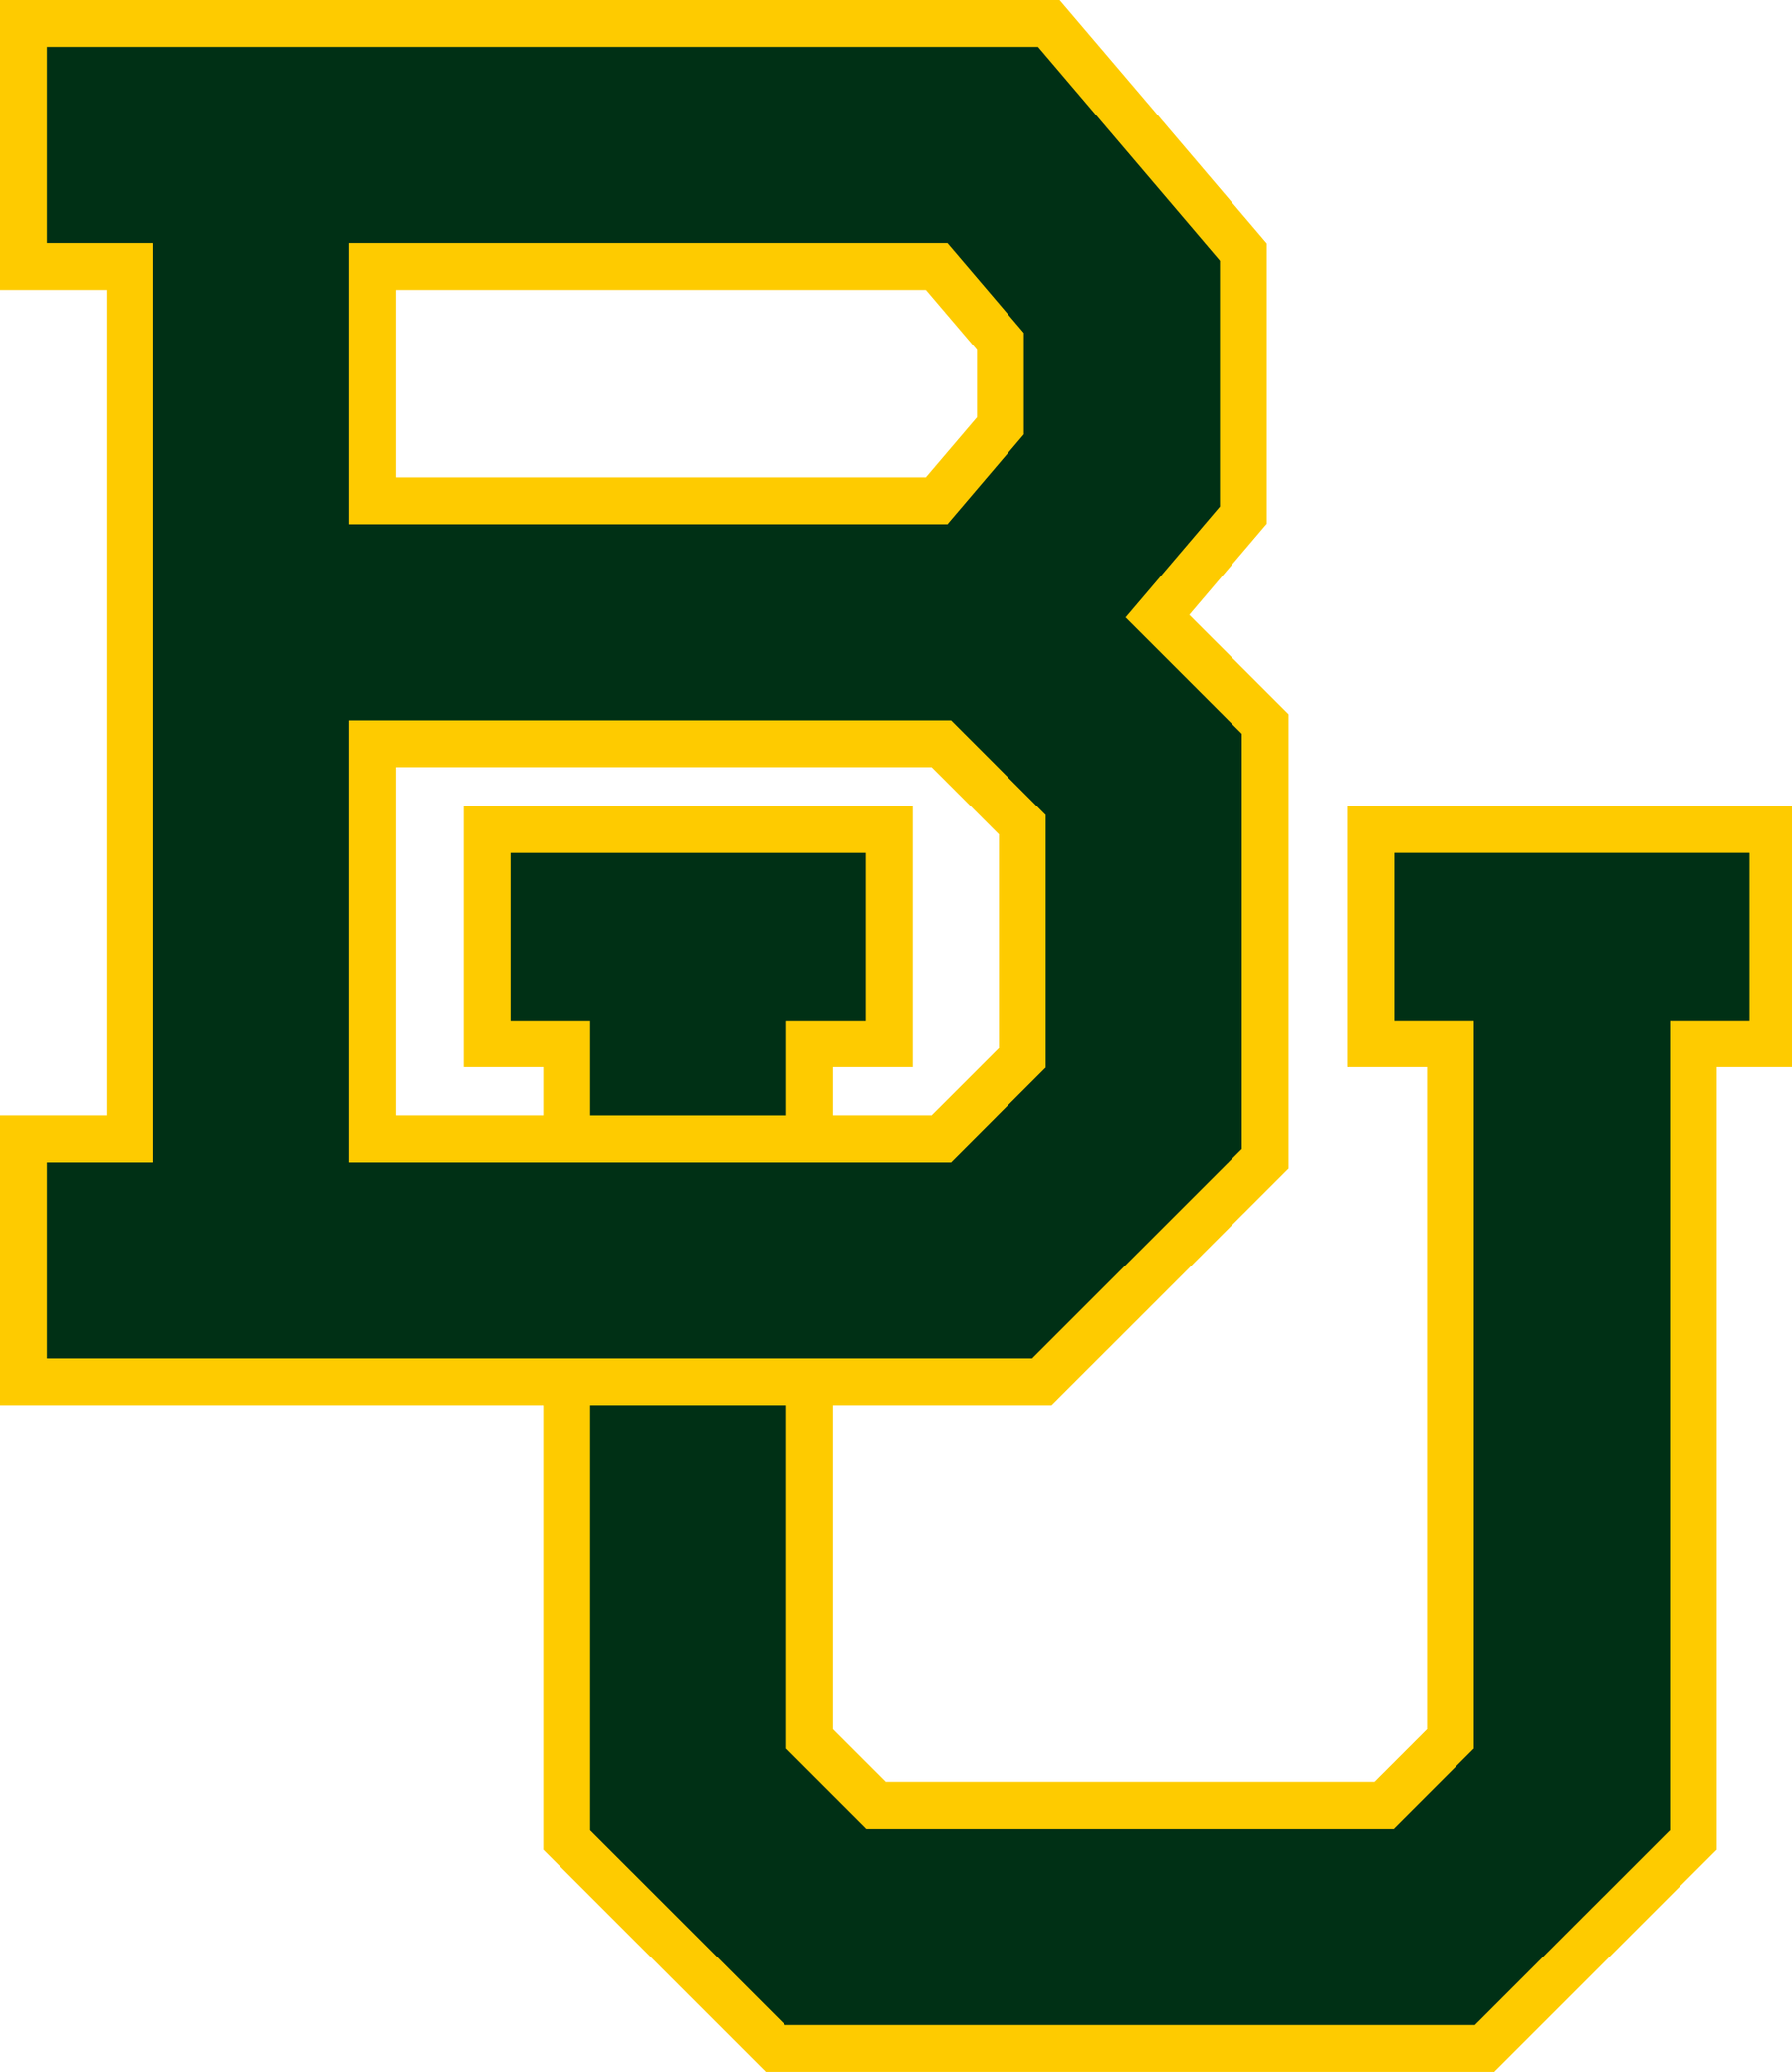 Baylor Logo - File:2018 Baylor Athletics Logo.png - Wikimedia Commons